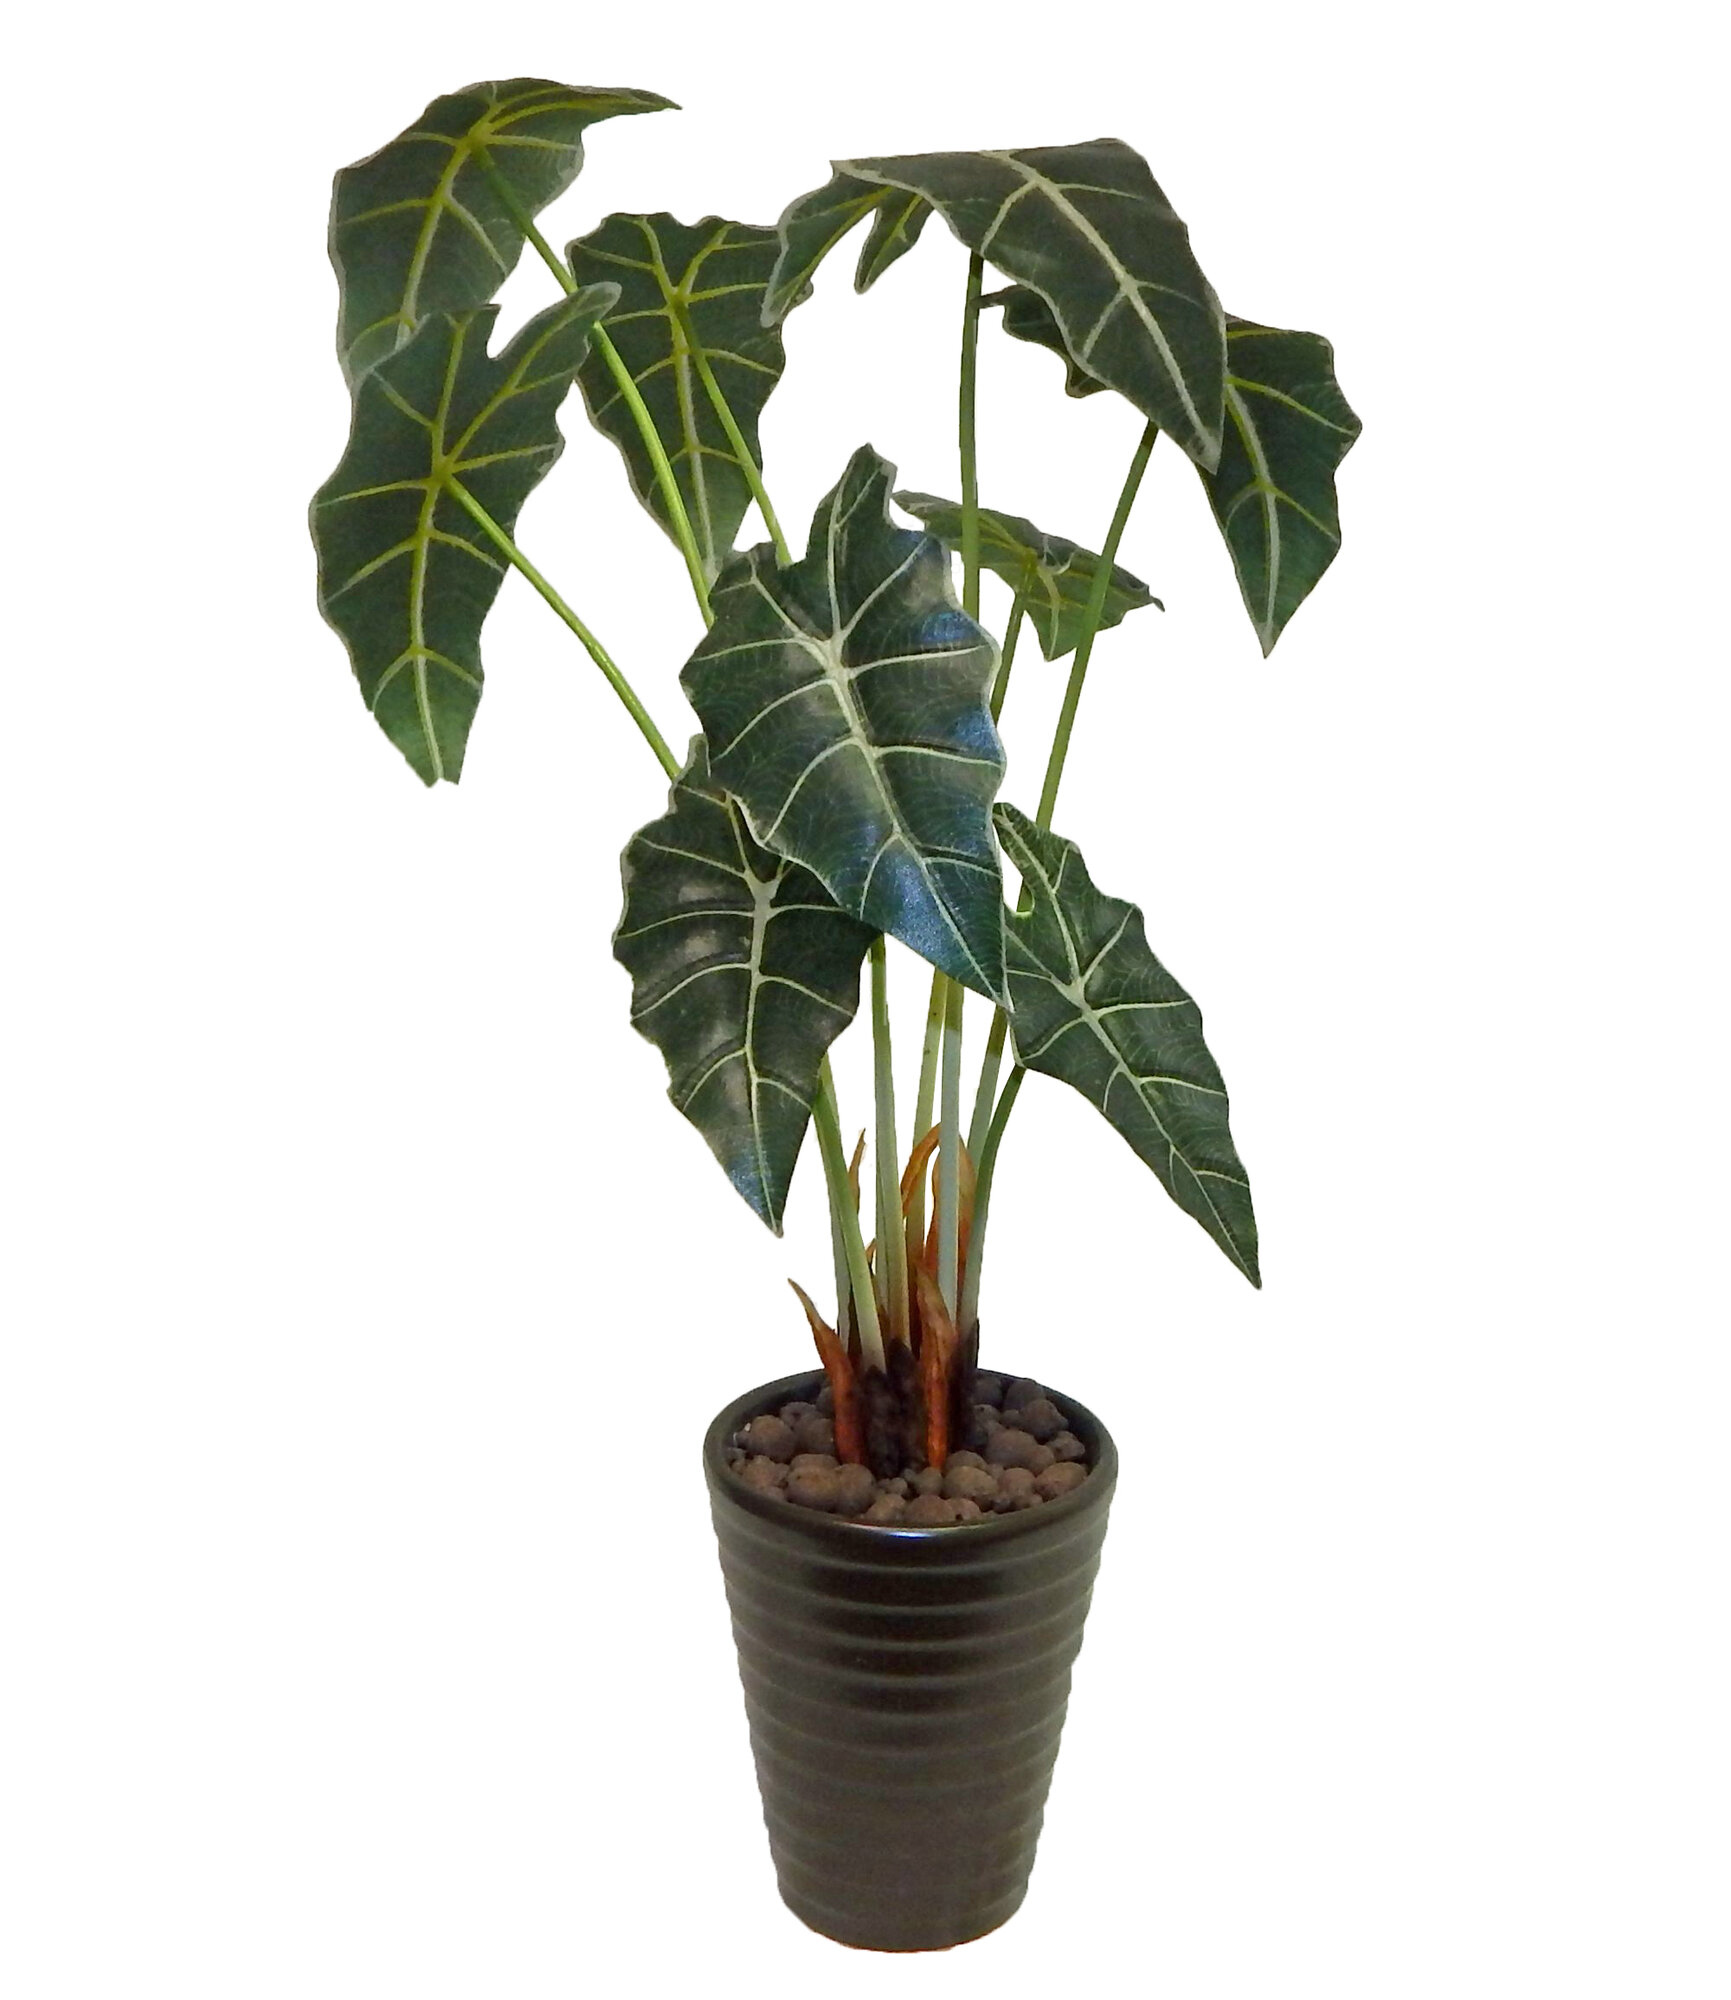  Bay  Isle Home Tropical Alocasia Foliage Plant  in Pot  eBay